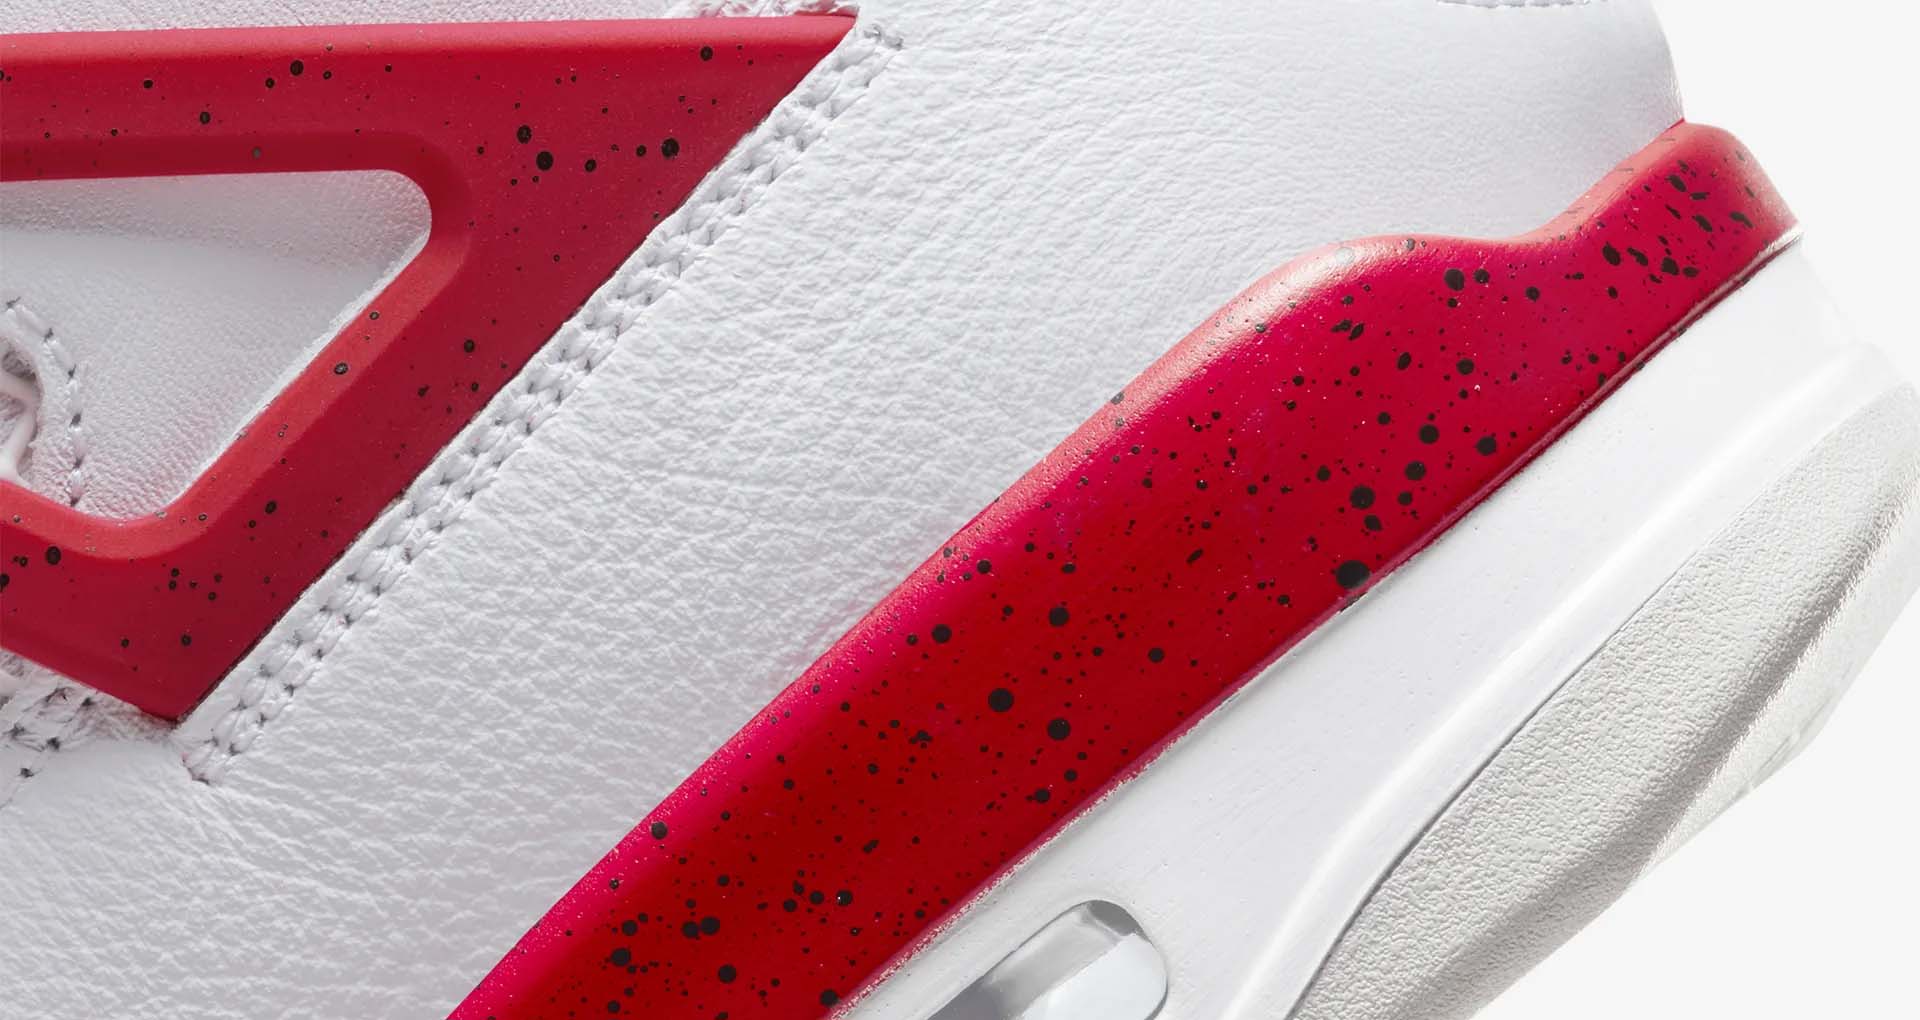 The Air Jordan 4 Red Cement Releases September 9 - Sneaker News